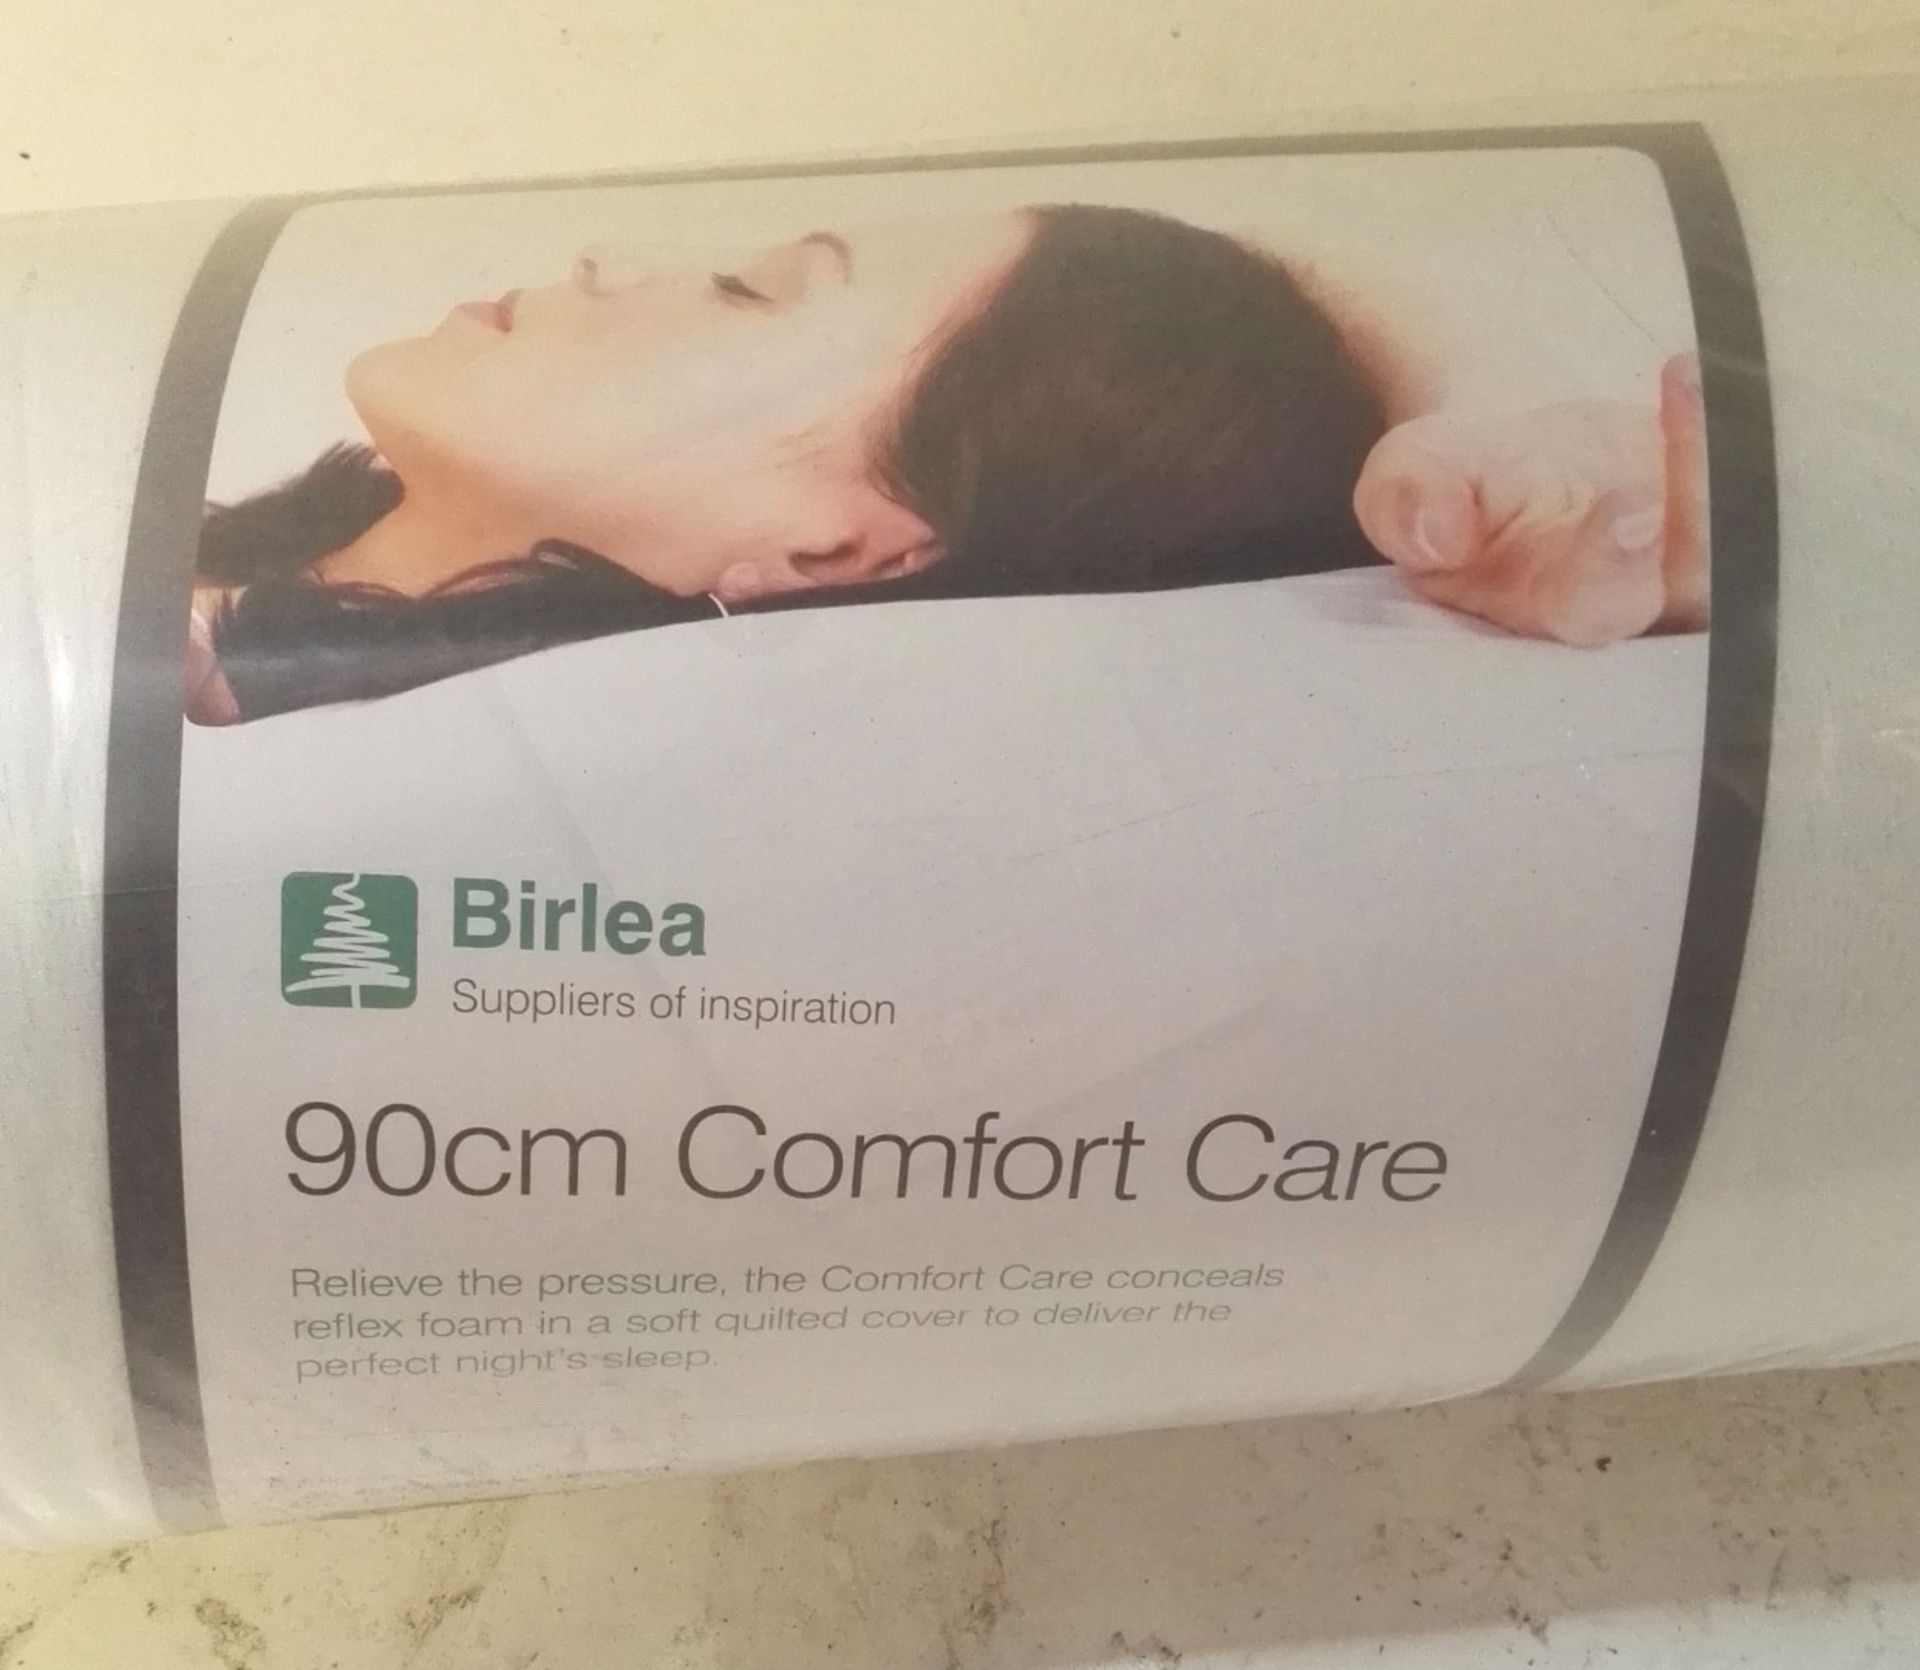 1 x Birlea 90cm Comfort Care Firm Rolled Up Reflex Foam Mattress - Brand New Stock - CL286 - - Image 3 of 7